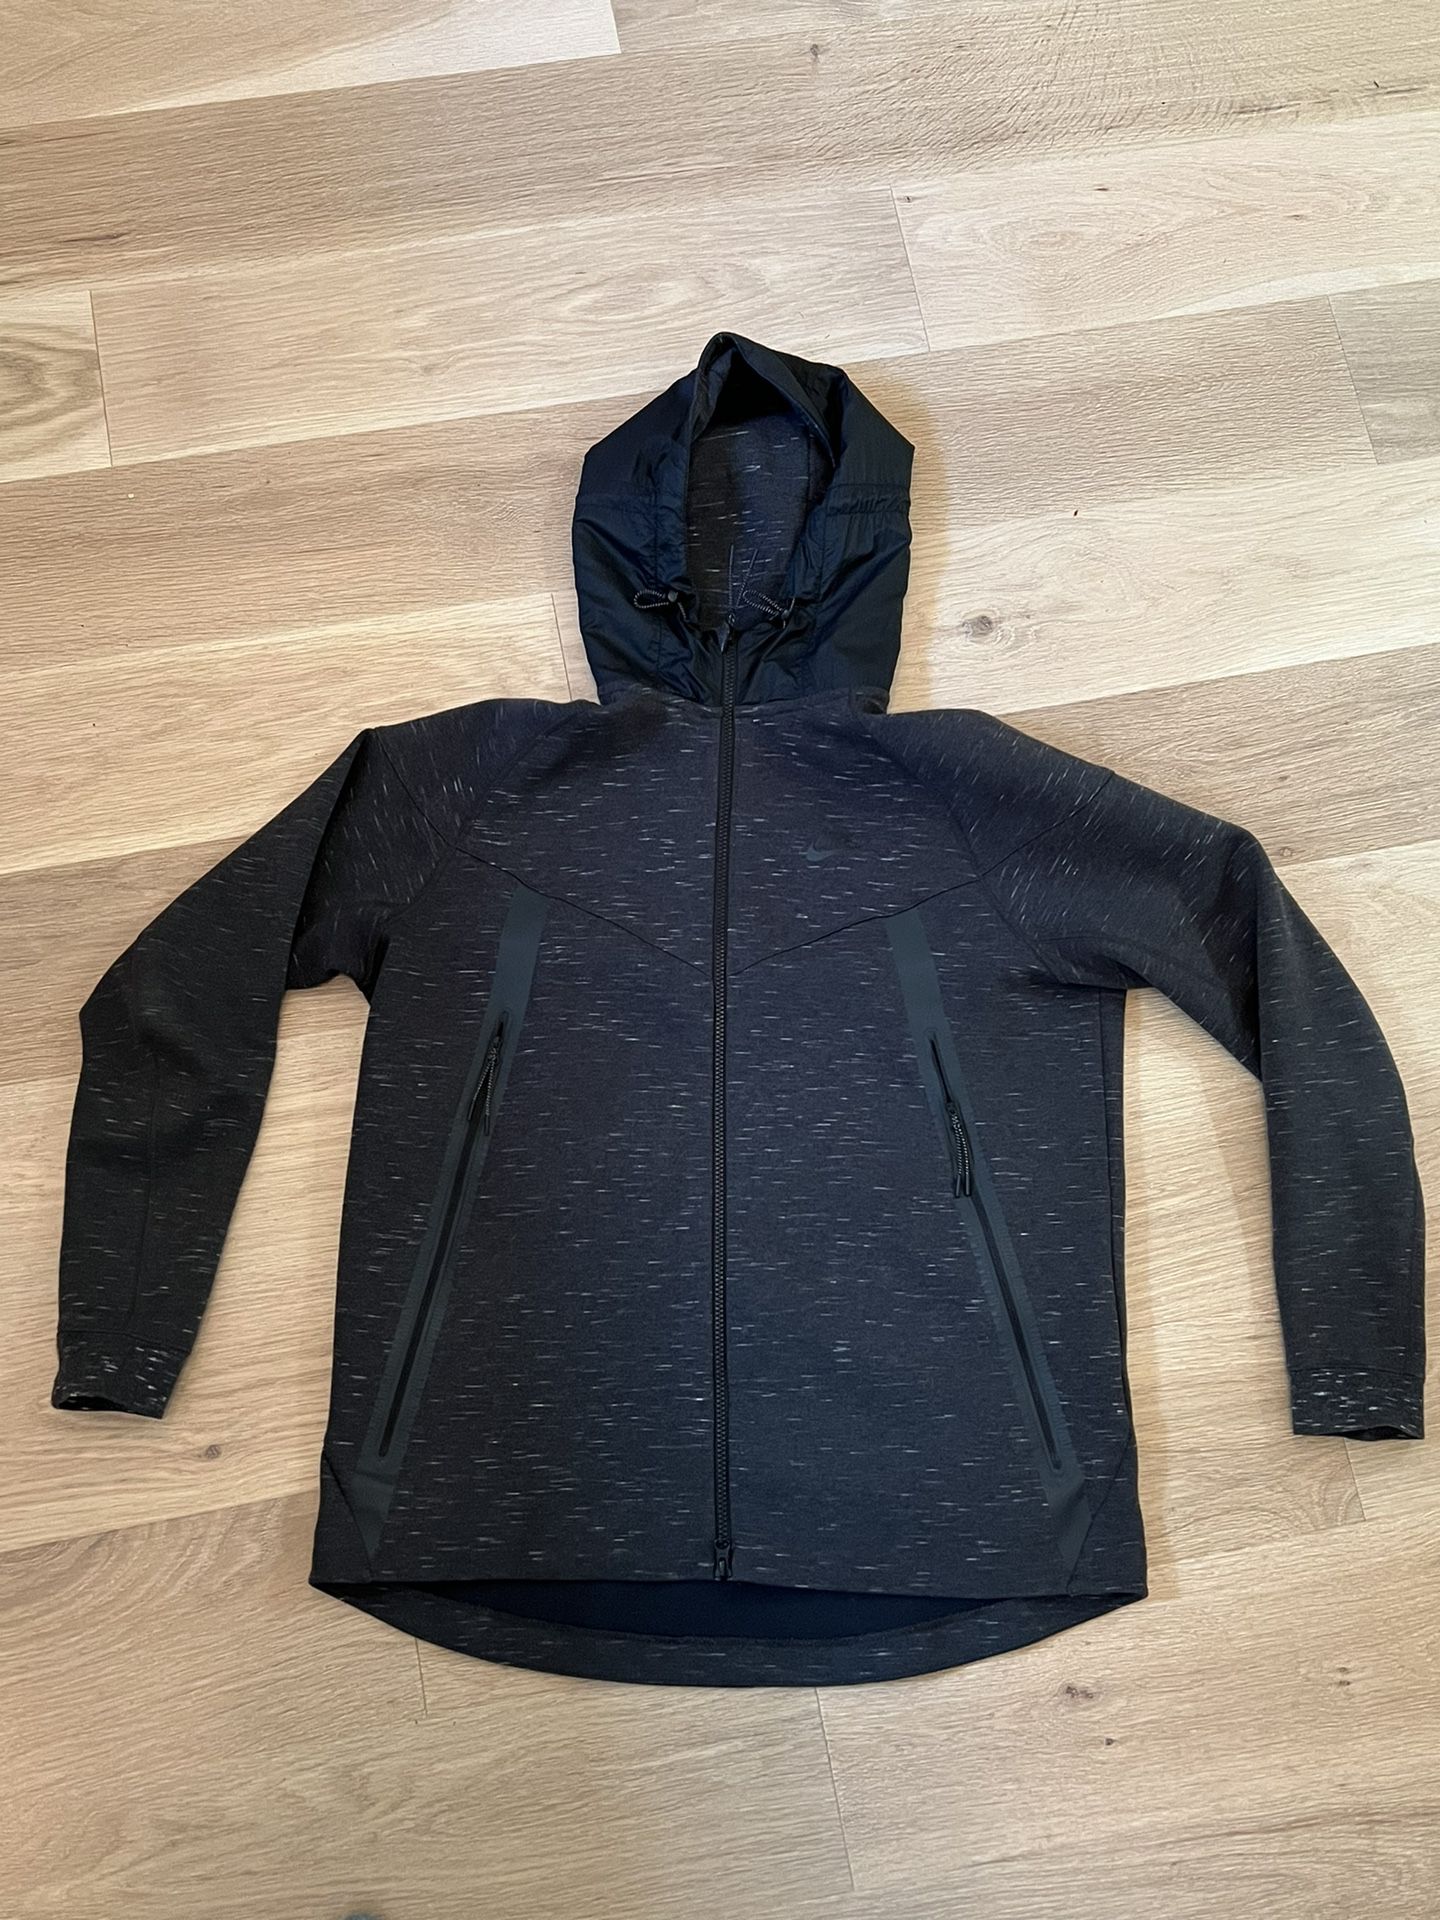 Nike Tech Fleece Bonded Windrunner Jacket in Dark Grey size Large